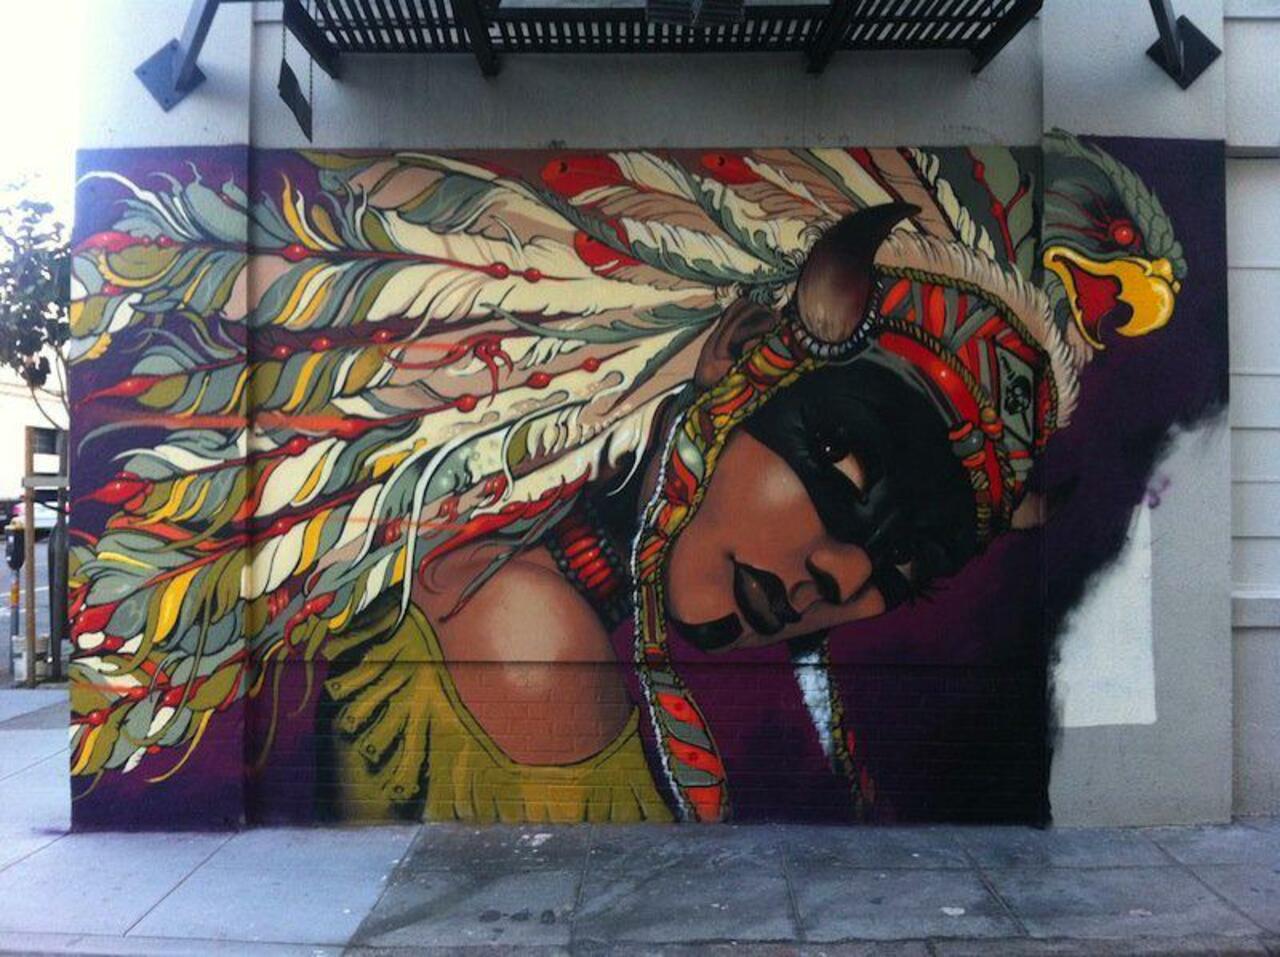 RT @niumestreetart: War bonnet. Find more amazing #graffiti in our gallery: http://bit.ly/1GPAOAT #mural #art http://t.co/IrX8IweeQt